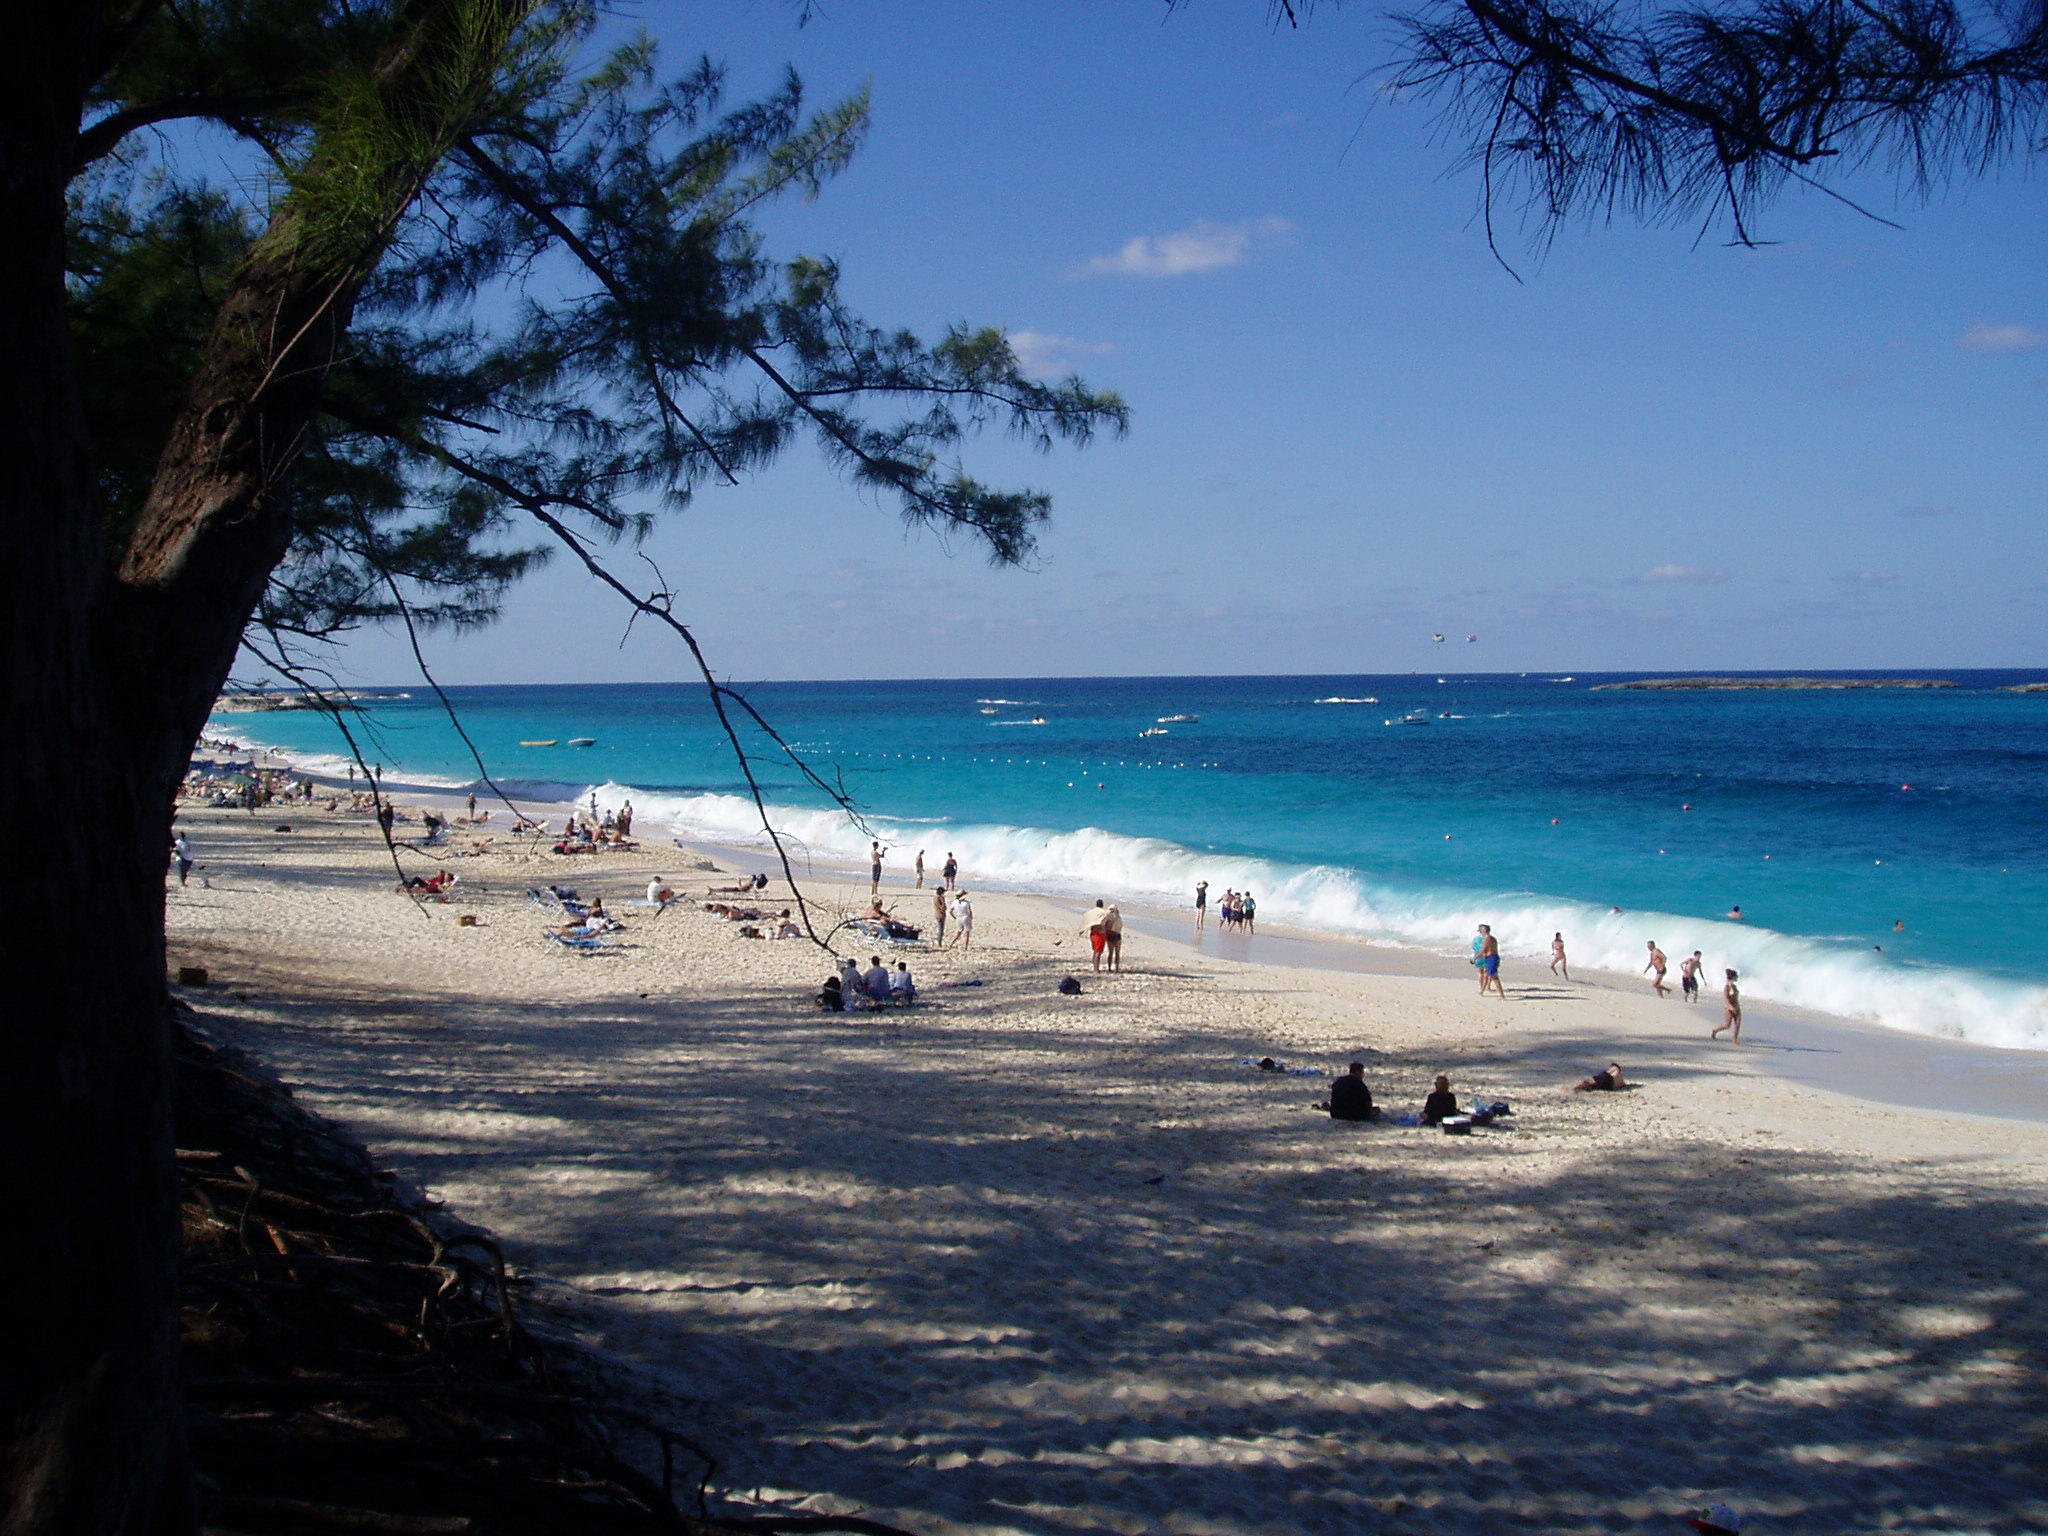 Sunrise Beach Club & Villas, Paradise Island, Bahamas Timeshare Resort